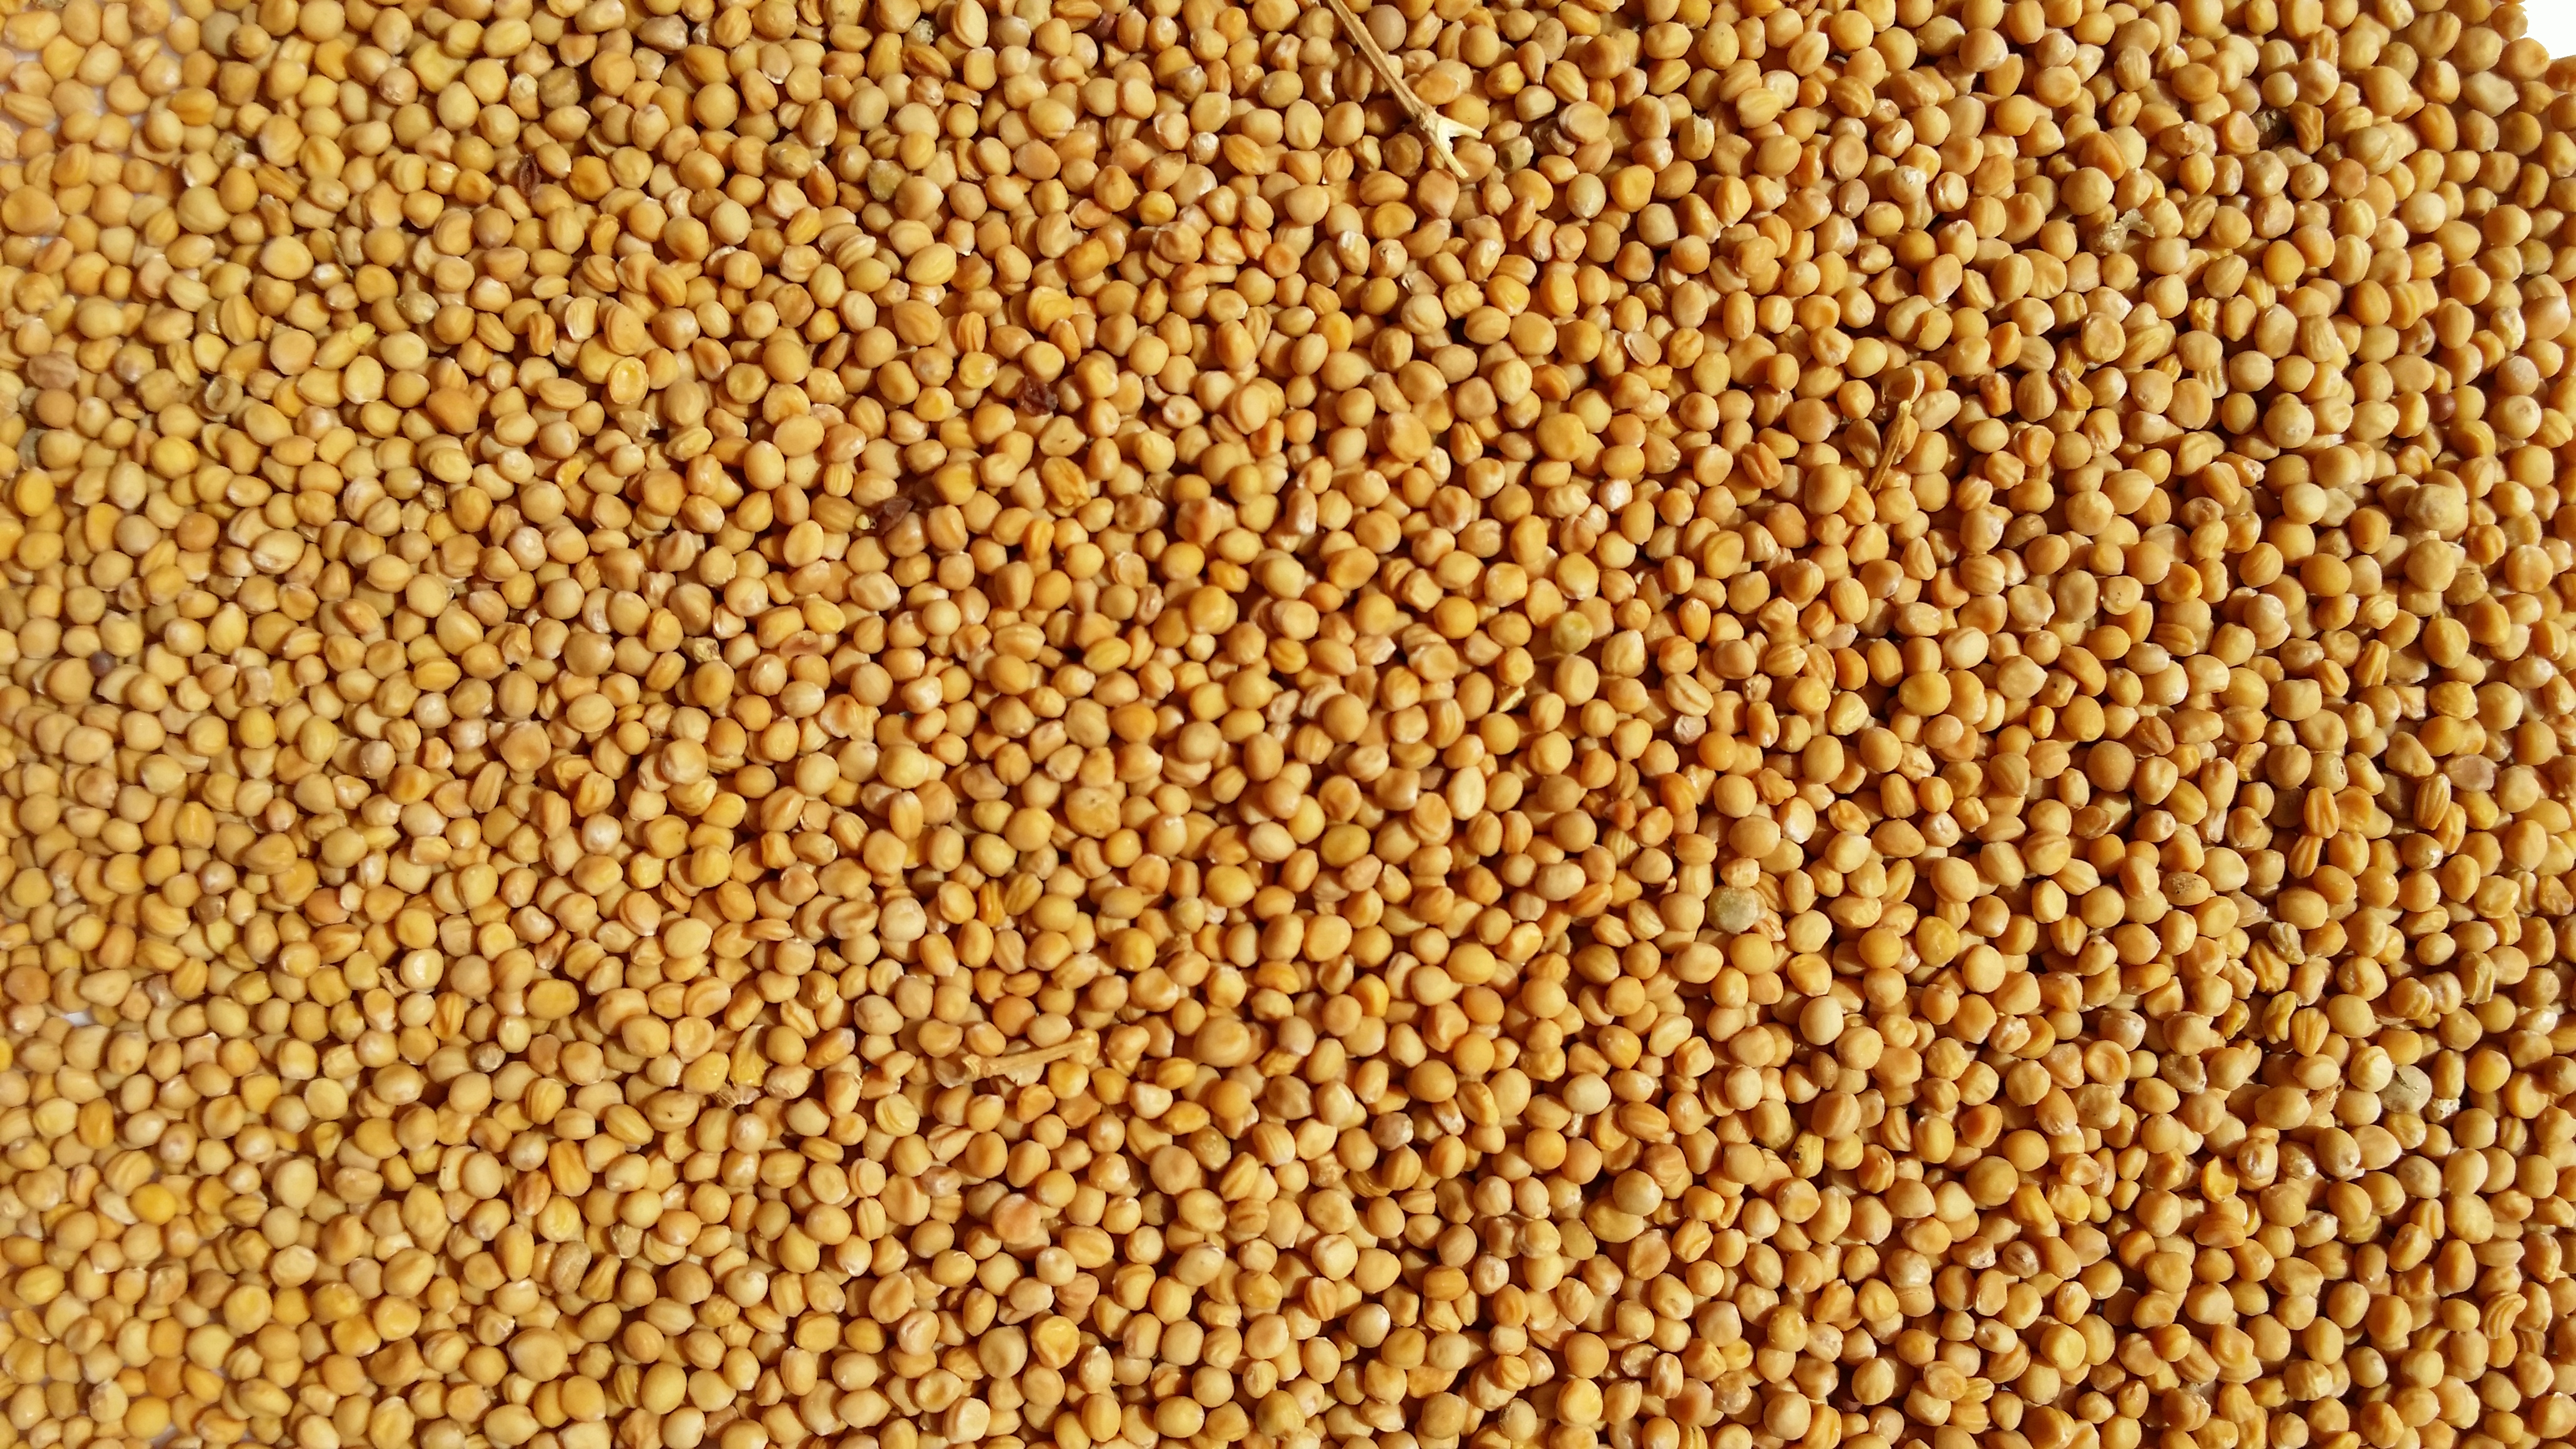 5 kg Yellow Mustard grains, organic, whole [n649 xg] 2022 cena specjalna